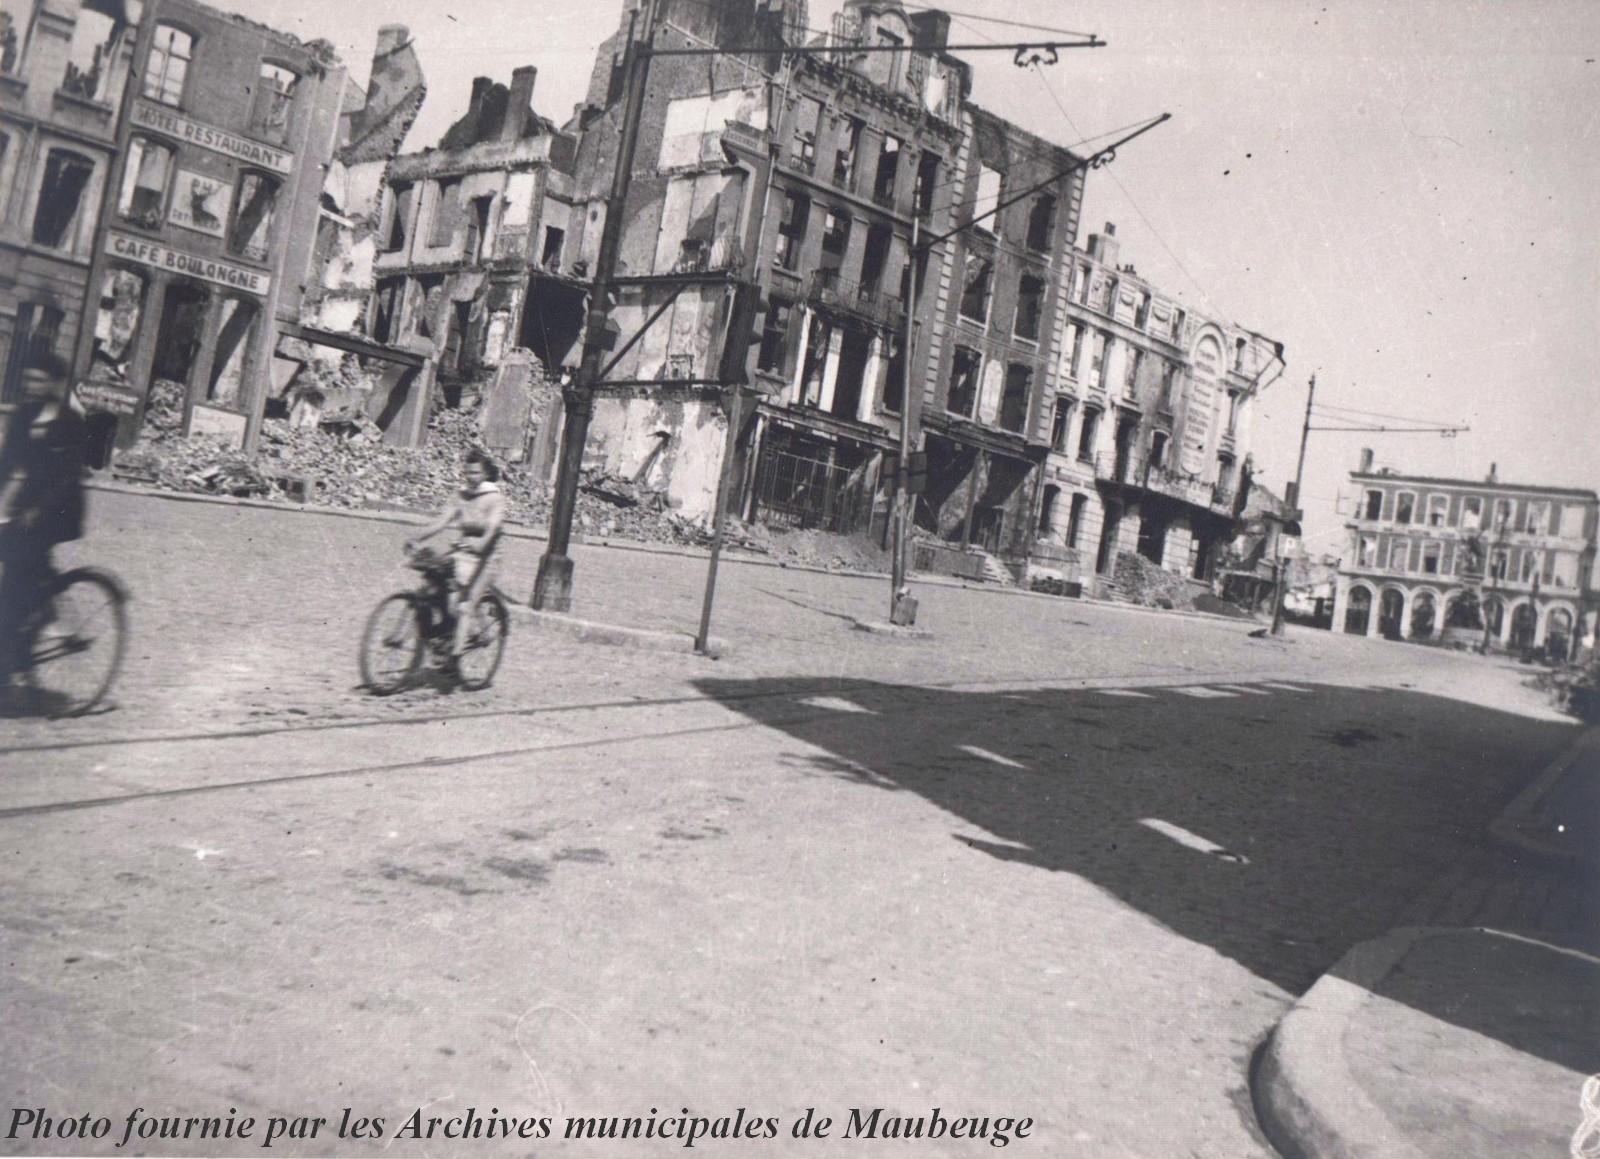 Muabeuge, la place Mabuse bombardée.